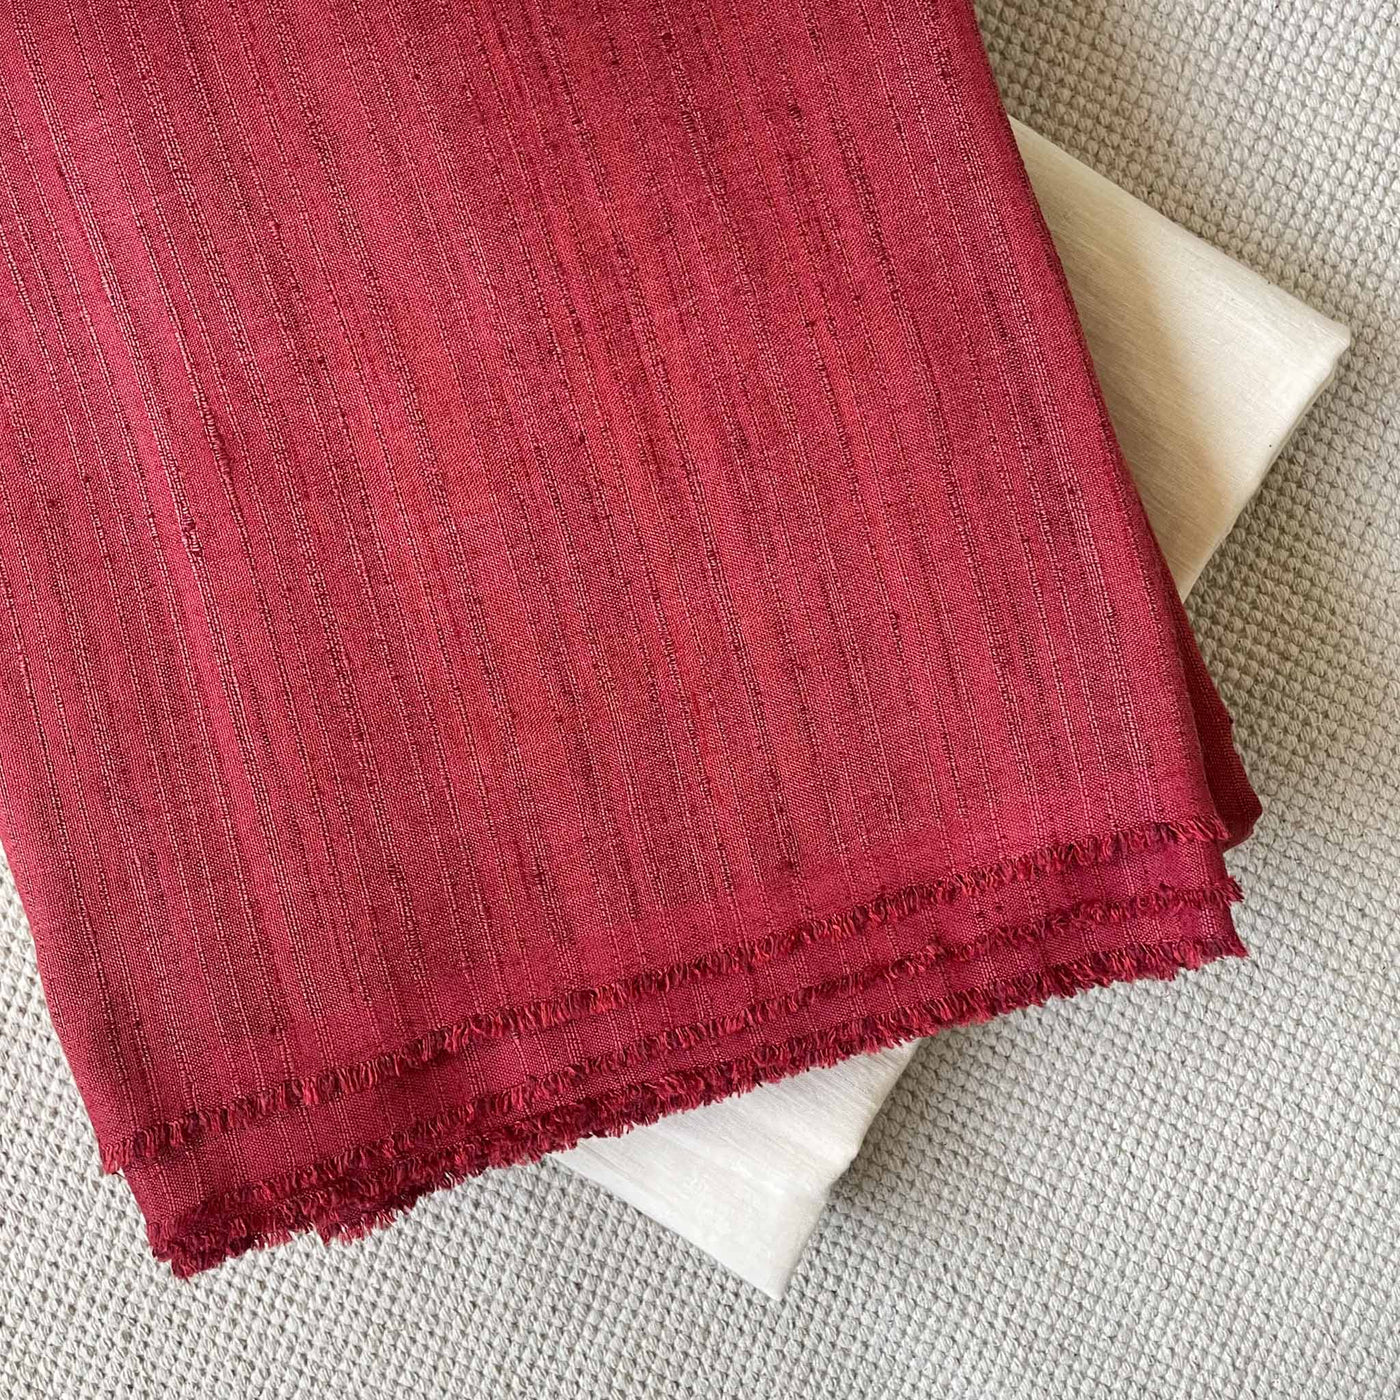 Fabric Pandit Kurta Set Unisex Deep Red Color Bhagalpuri Woven Cotton Slub Kurta Fabric (1.8 Meters) | and Cotton Pyjama (2.5 Meters) | Unstitched Combo Set